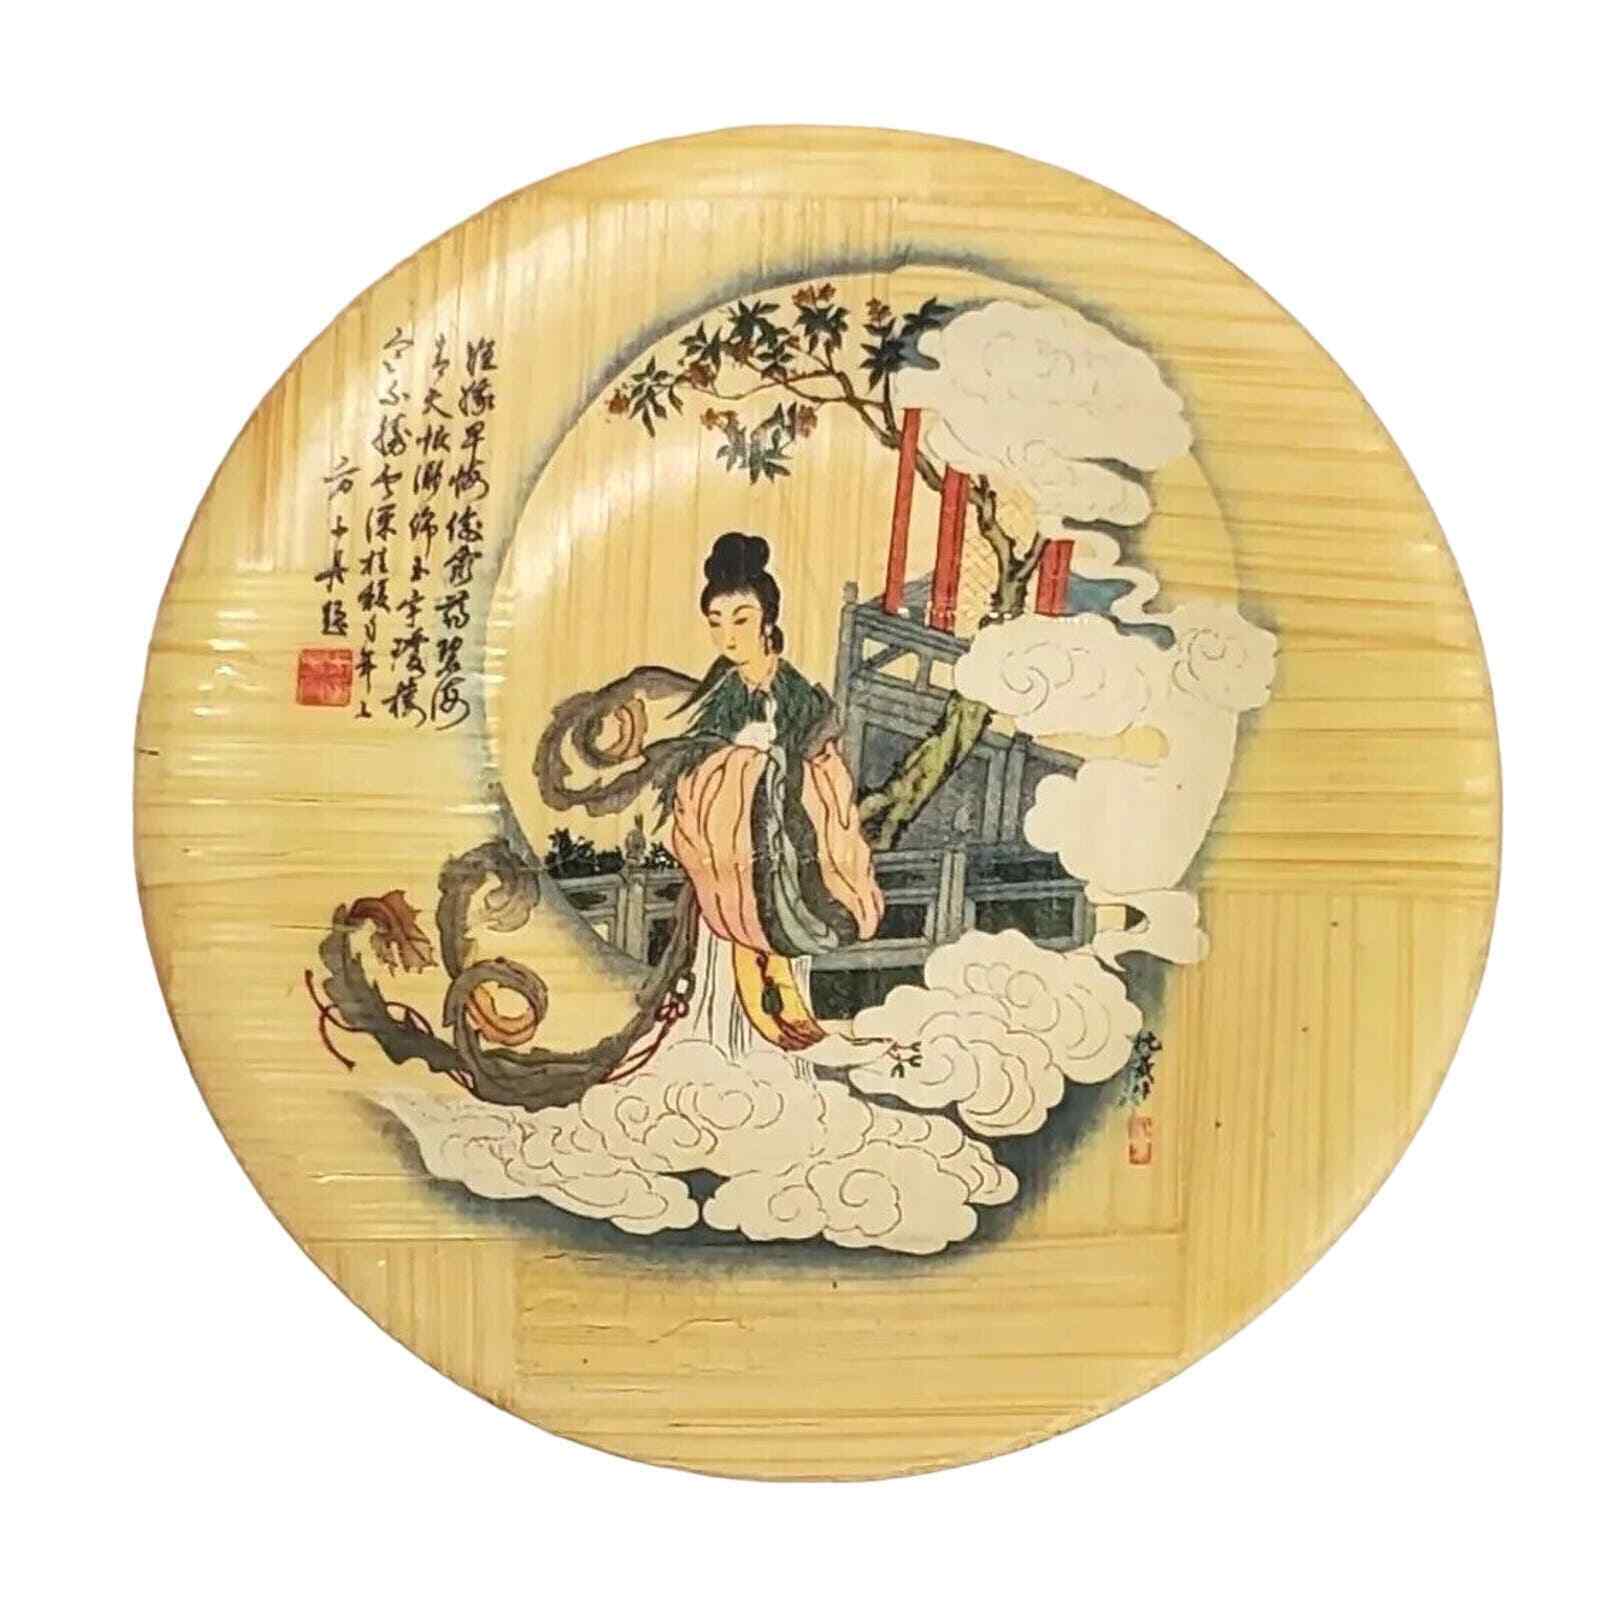 VTG Japanese Bamboo Decorative Coaster Plate Saucer Made/ Taiwan Republic China